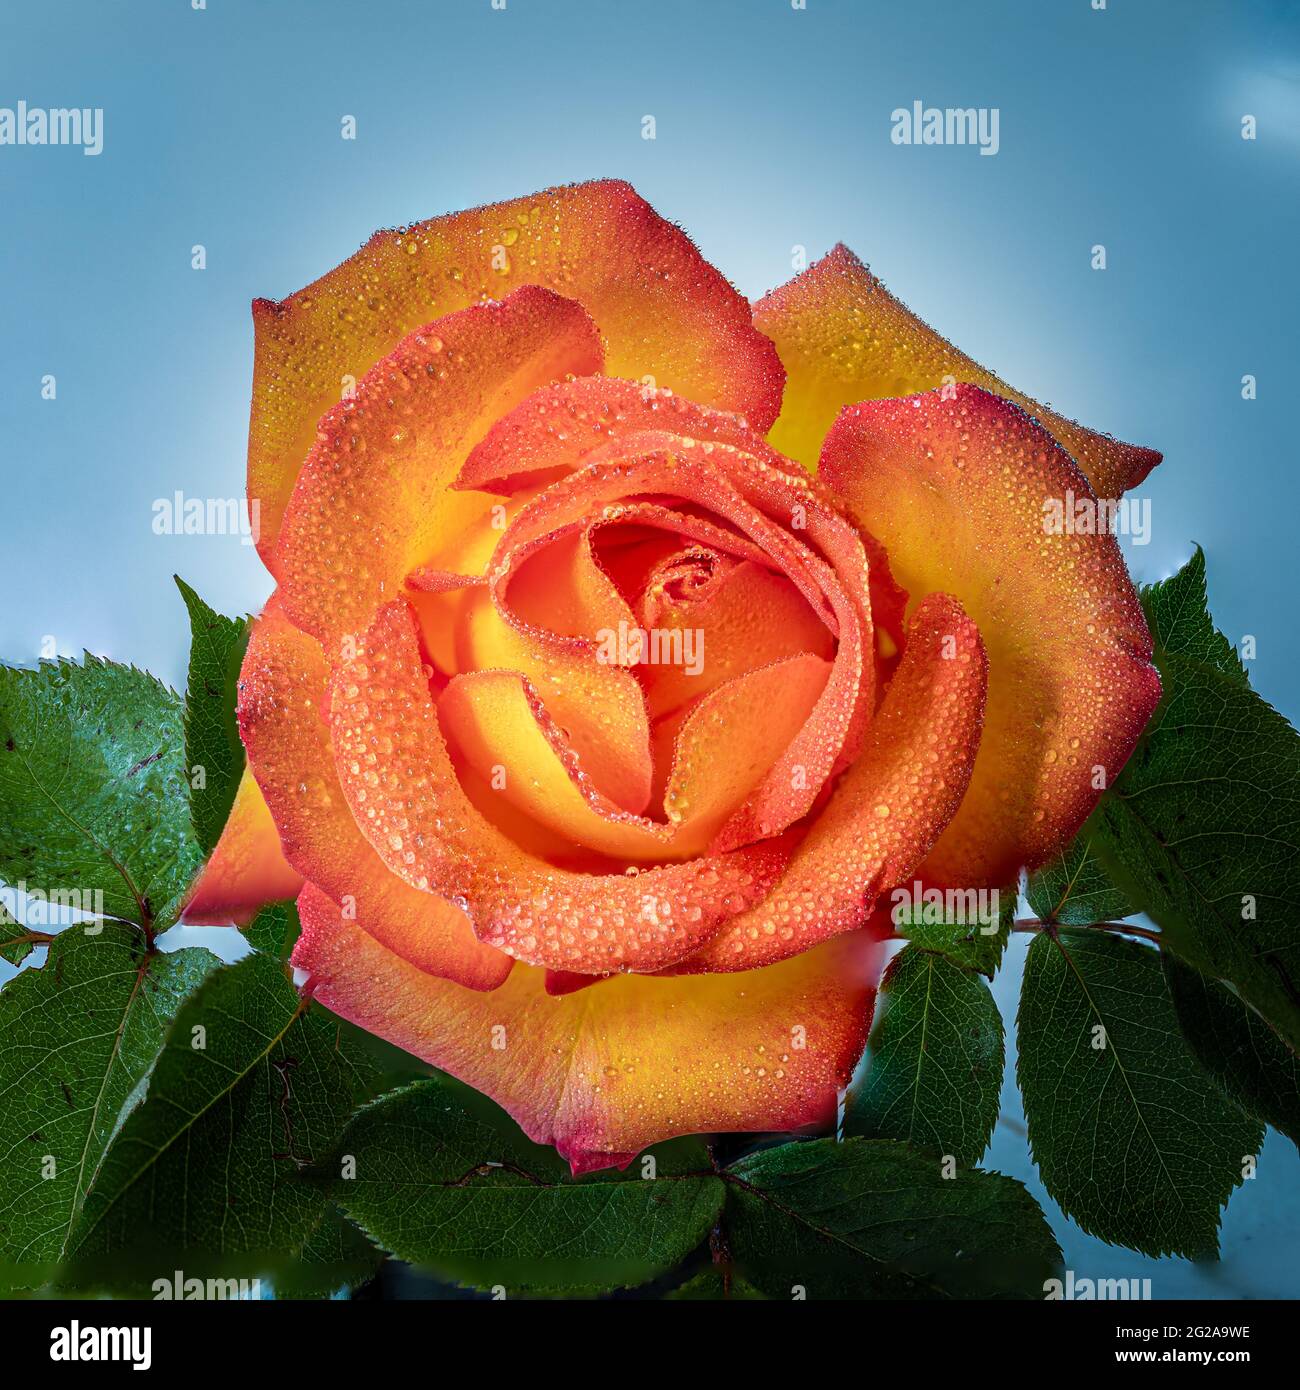 https://c8.alamy.com/comp/2G2A9WE/single-orange-rose-in-full-bloom-2G2A9WE.jpg